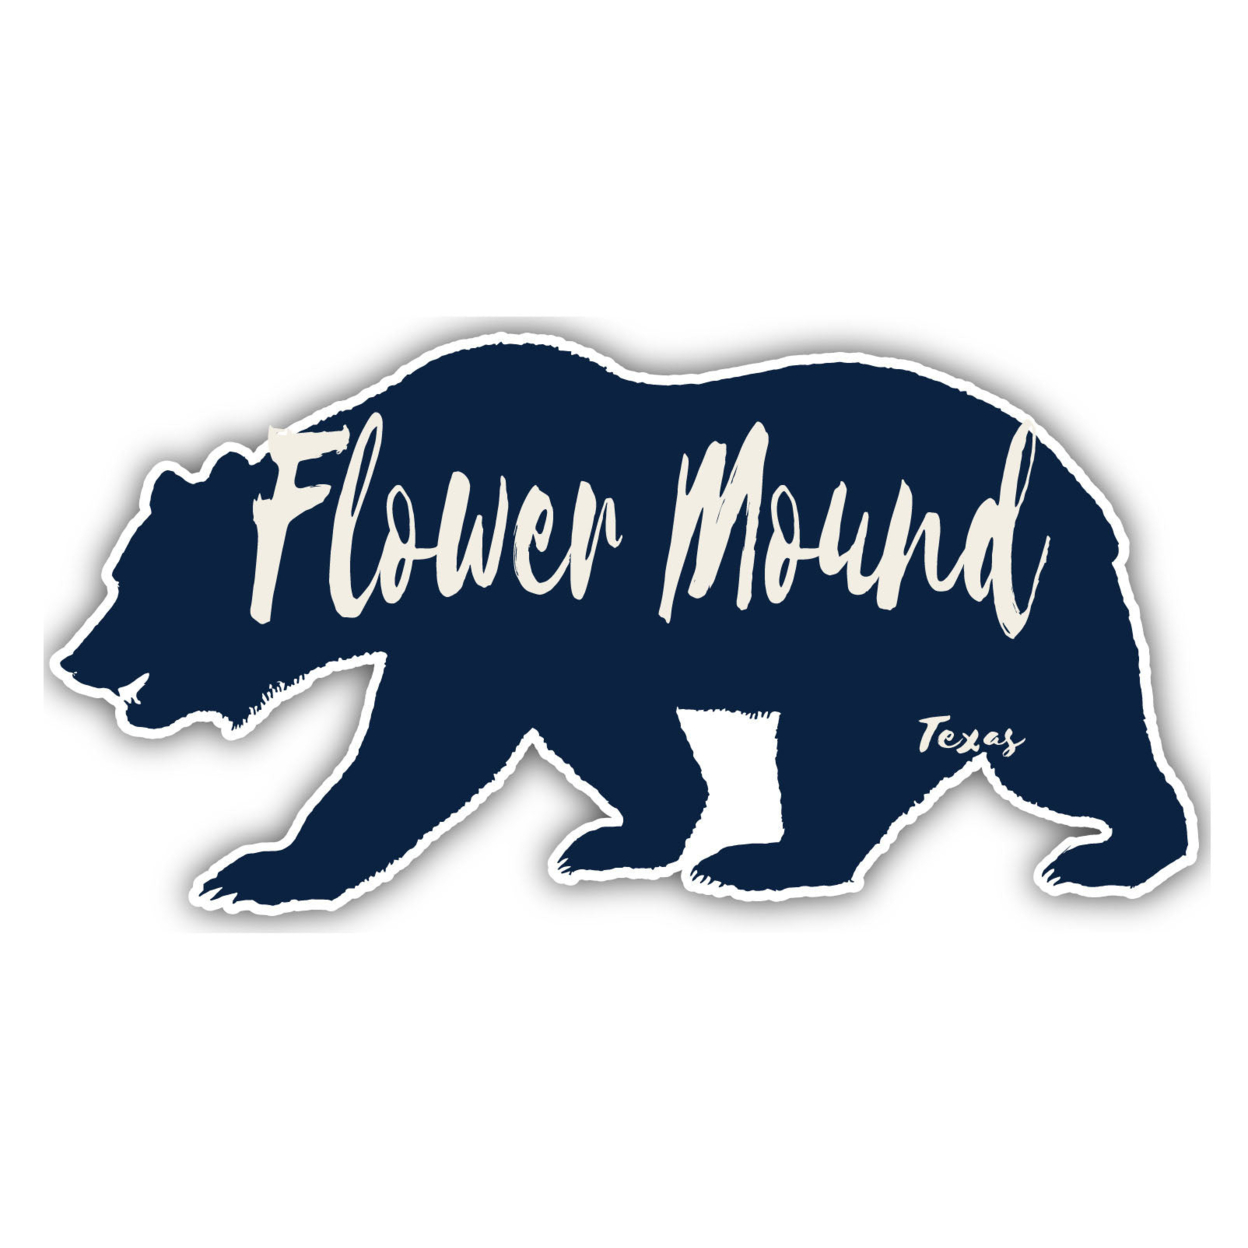 Flower Mound Texas Souvenir Decorative Stickers (Choose Theme And Size) - Single Unit, 4-Inch, Bear